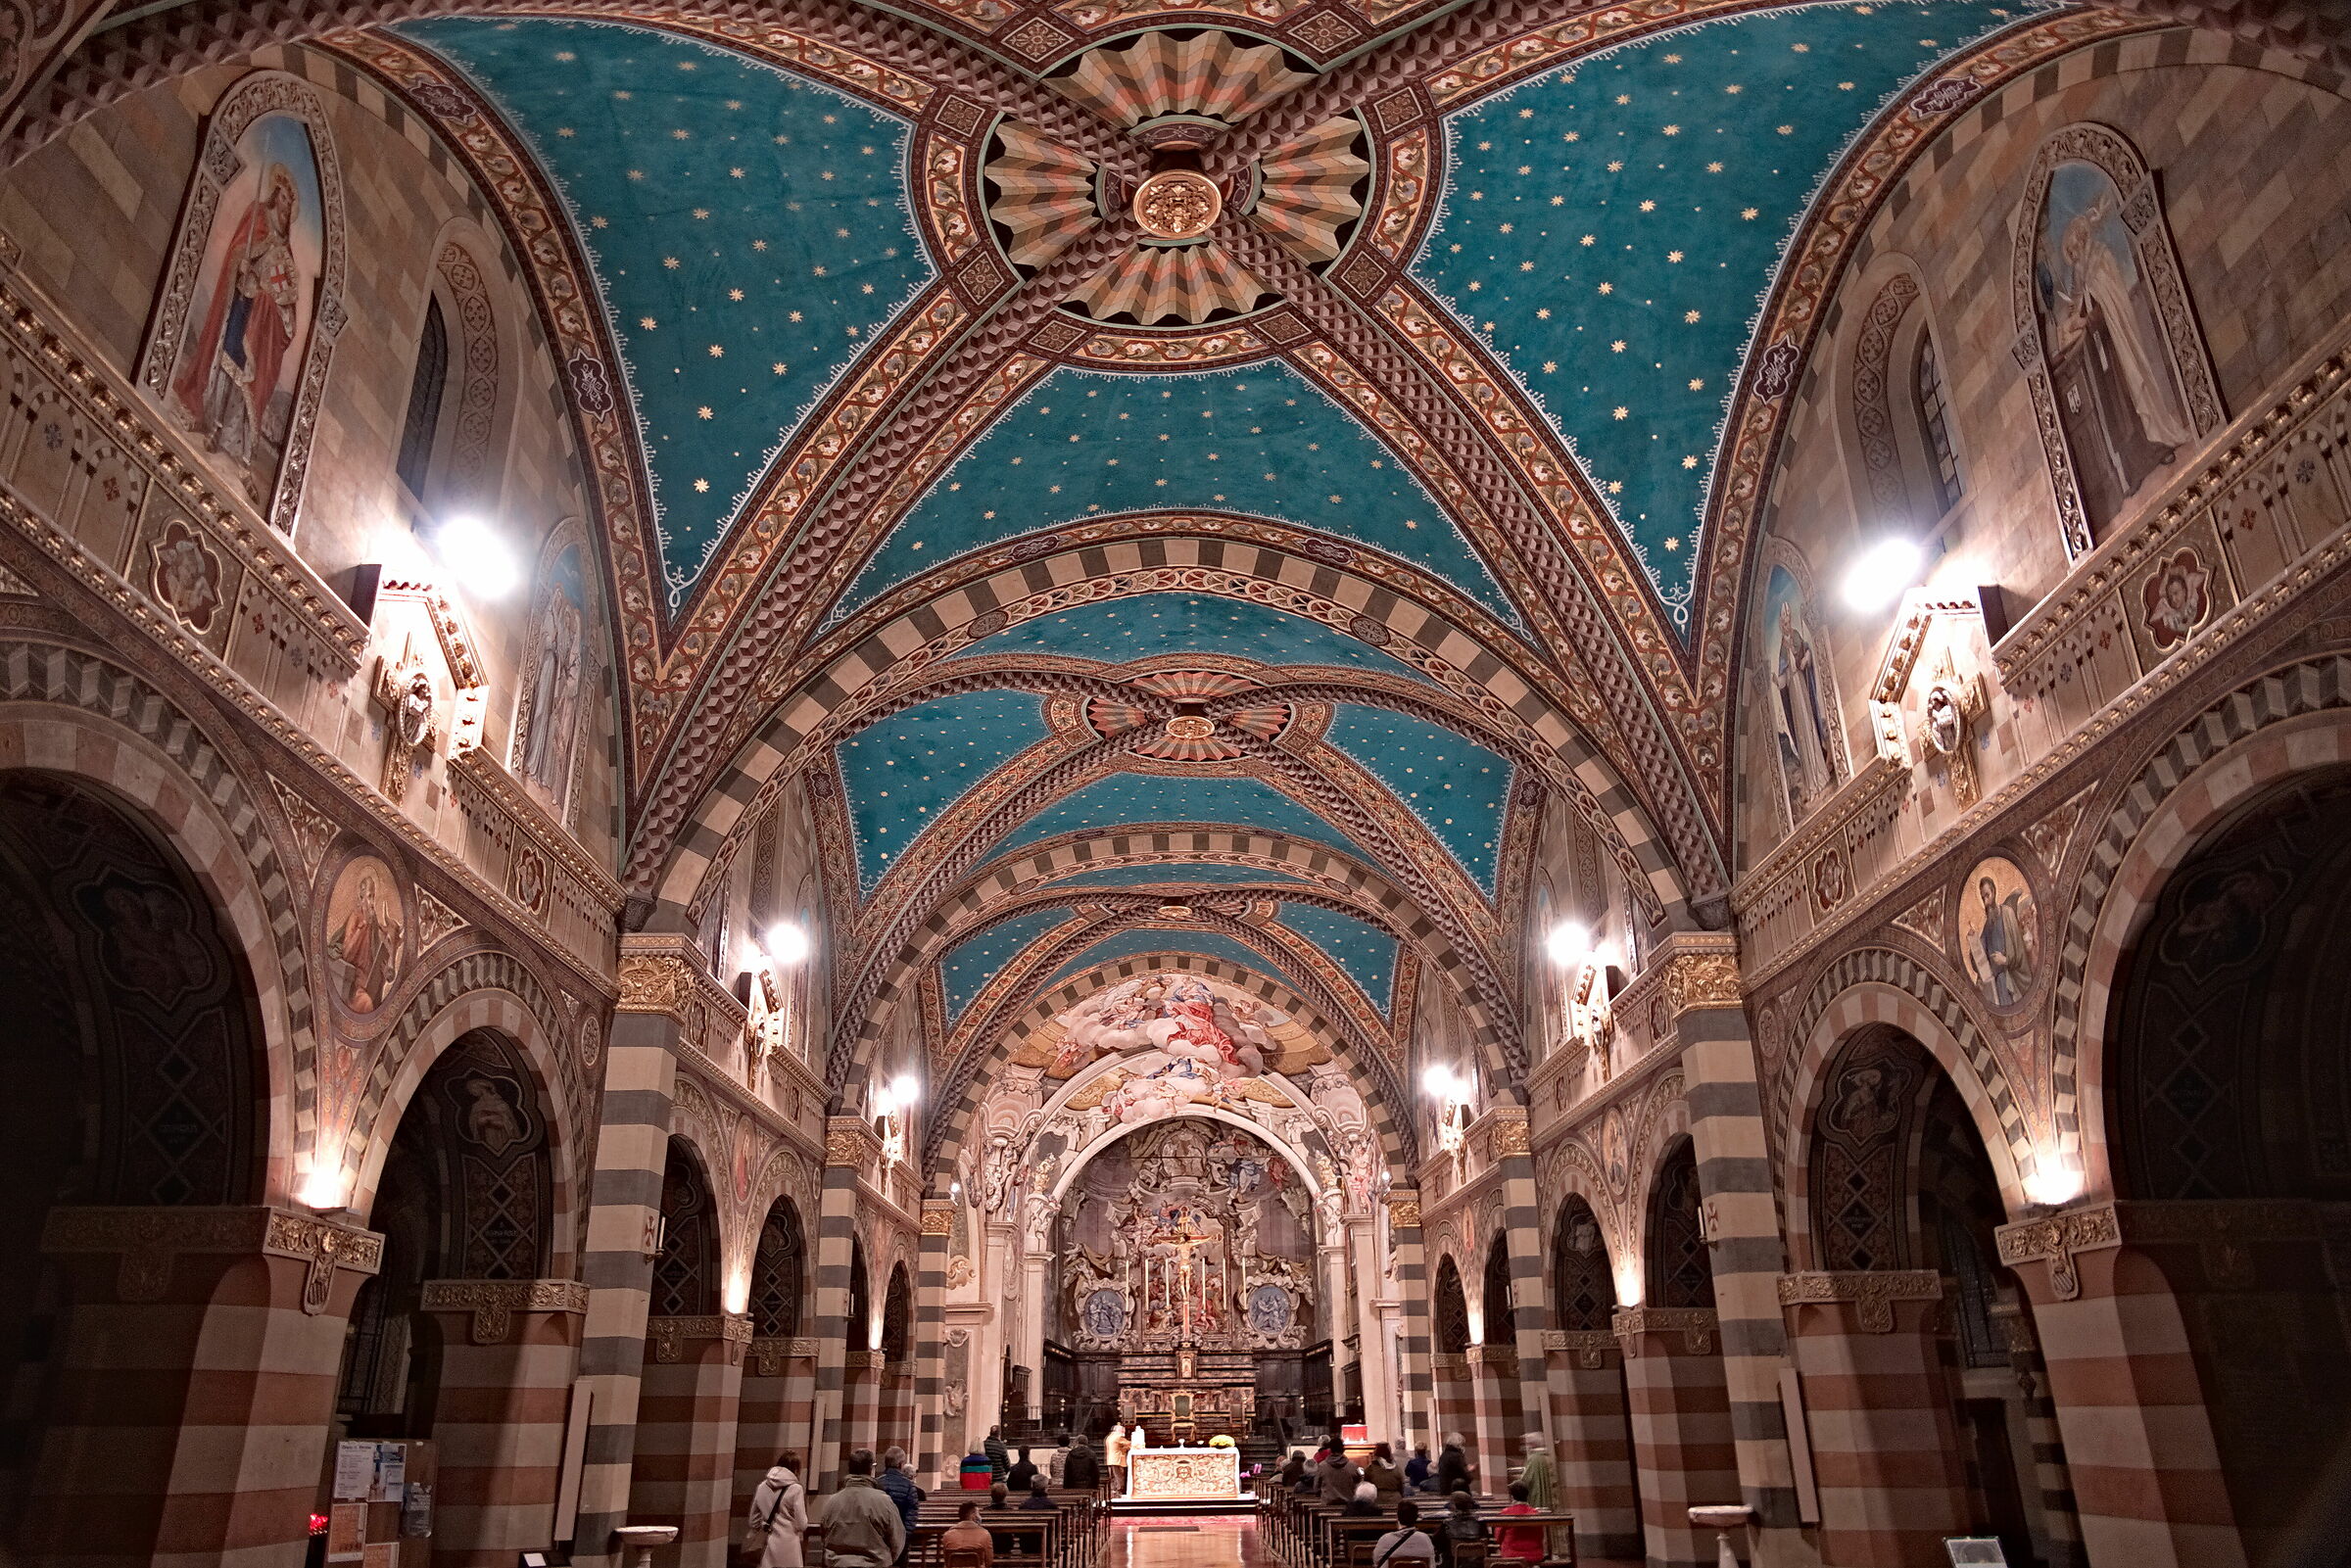 The interior of Bobbio Cathedral...